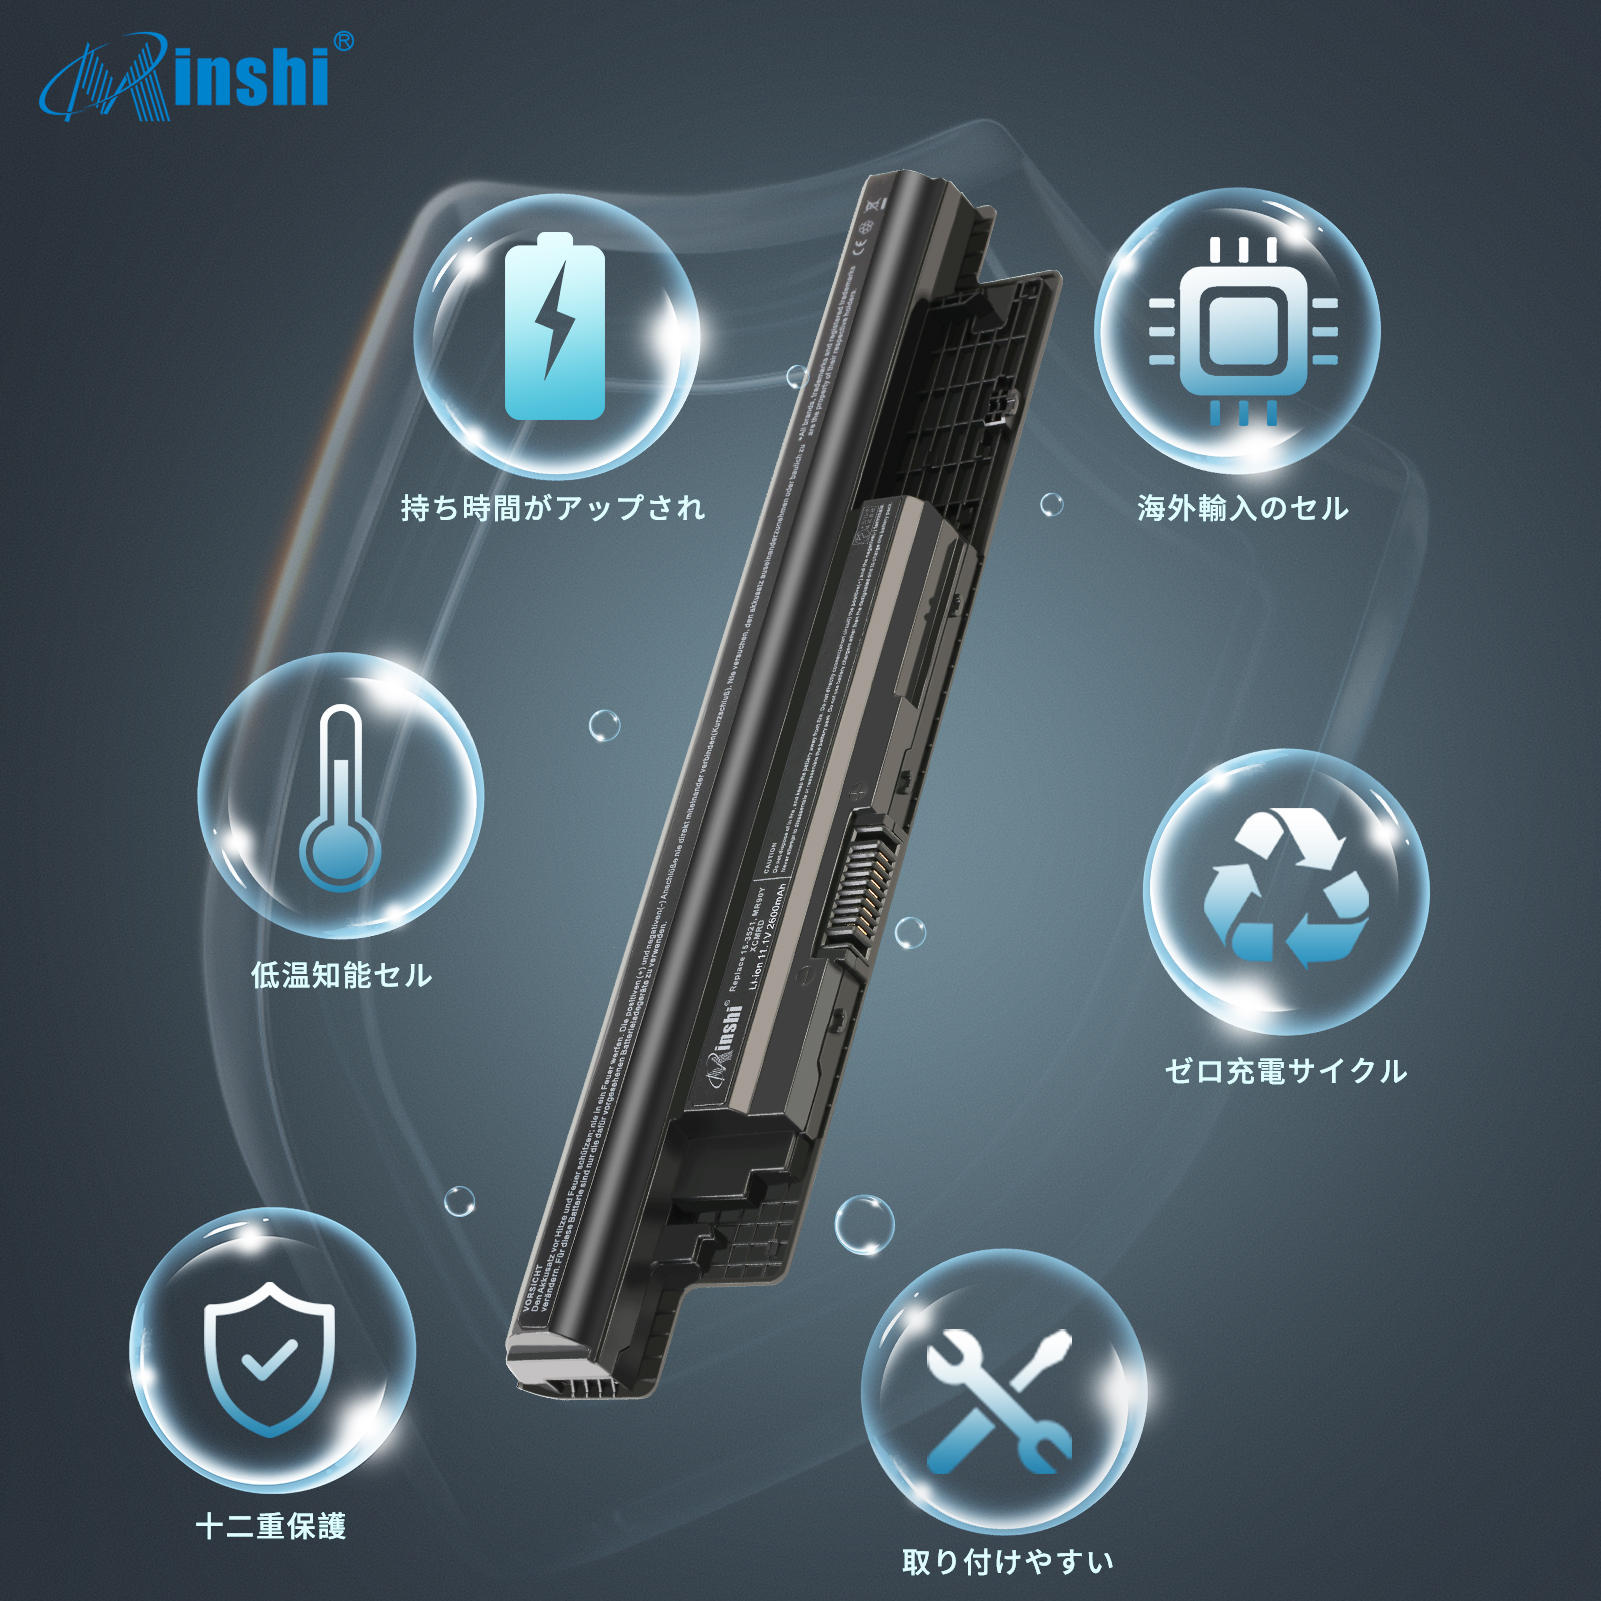 DELL デル Dell Latitude 3540 対応用  minshi高性能 互換バッテリー